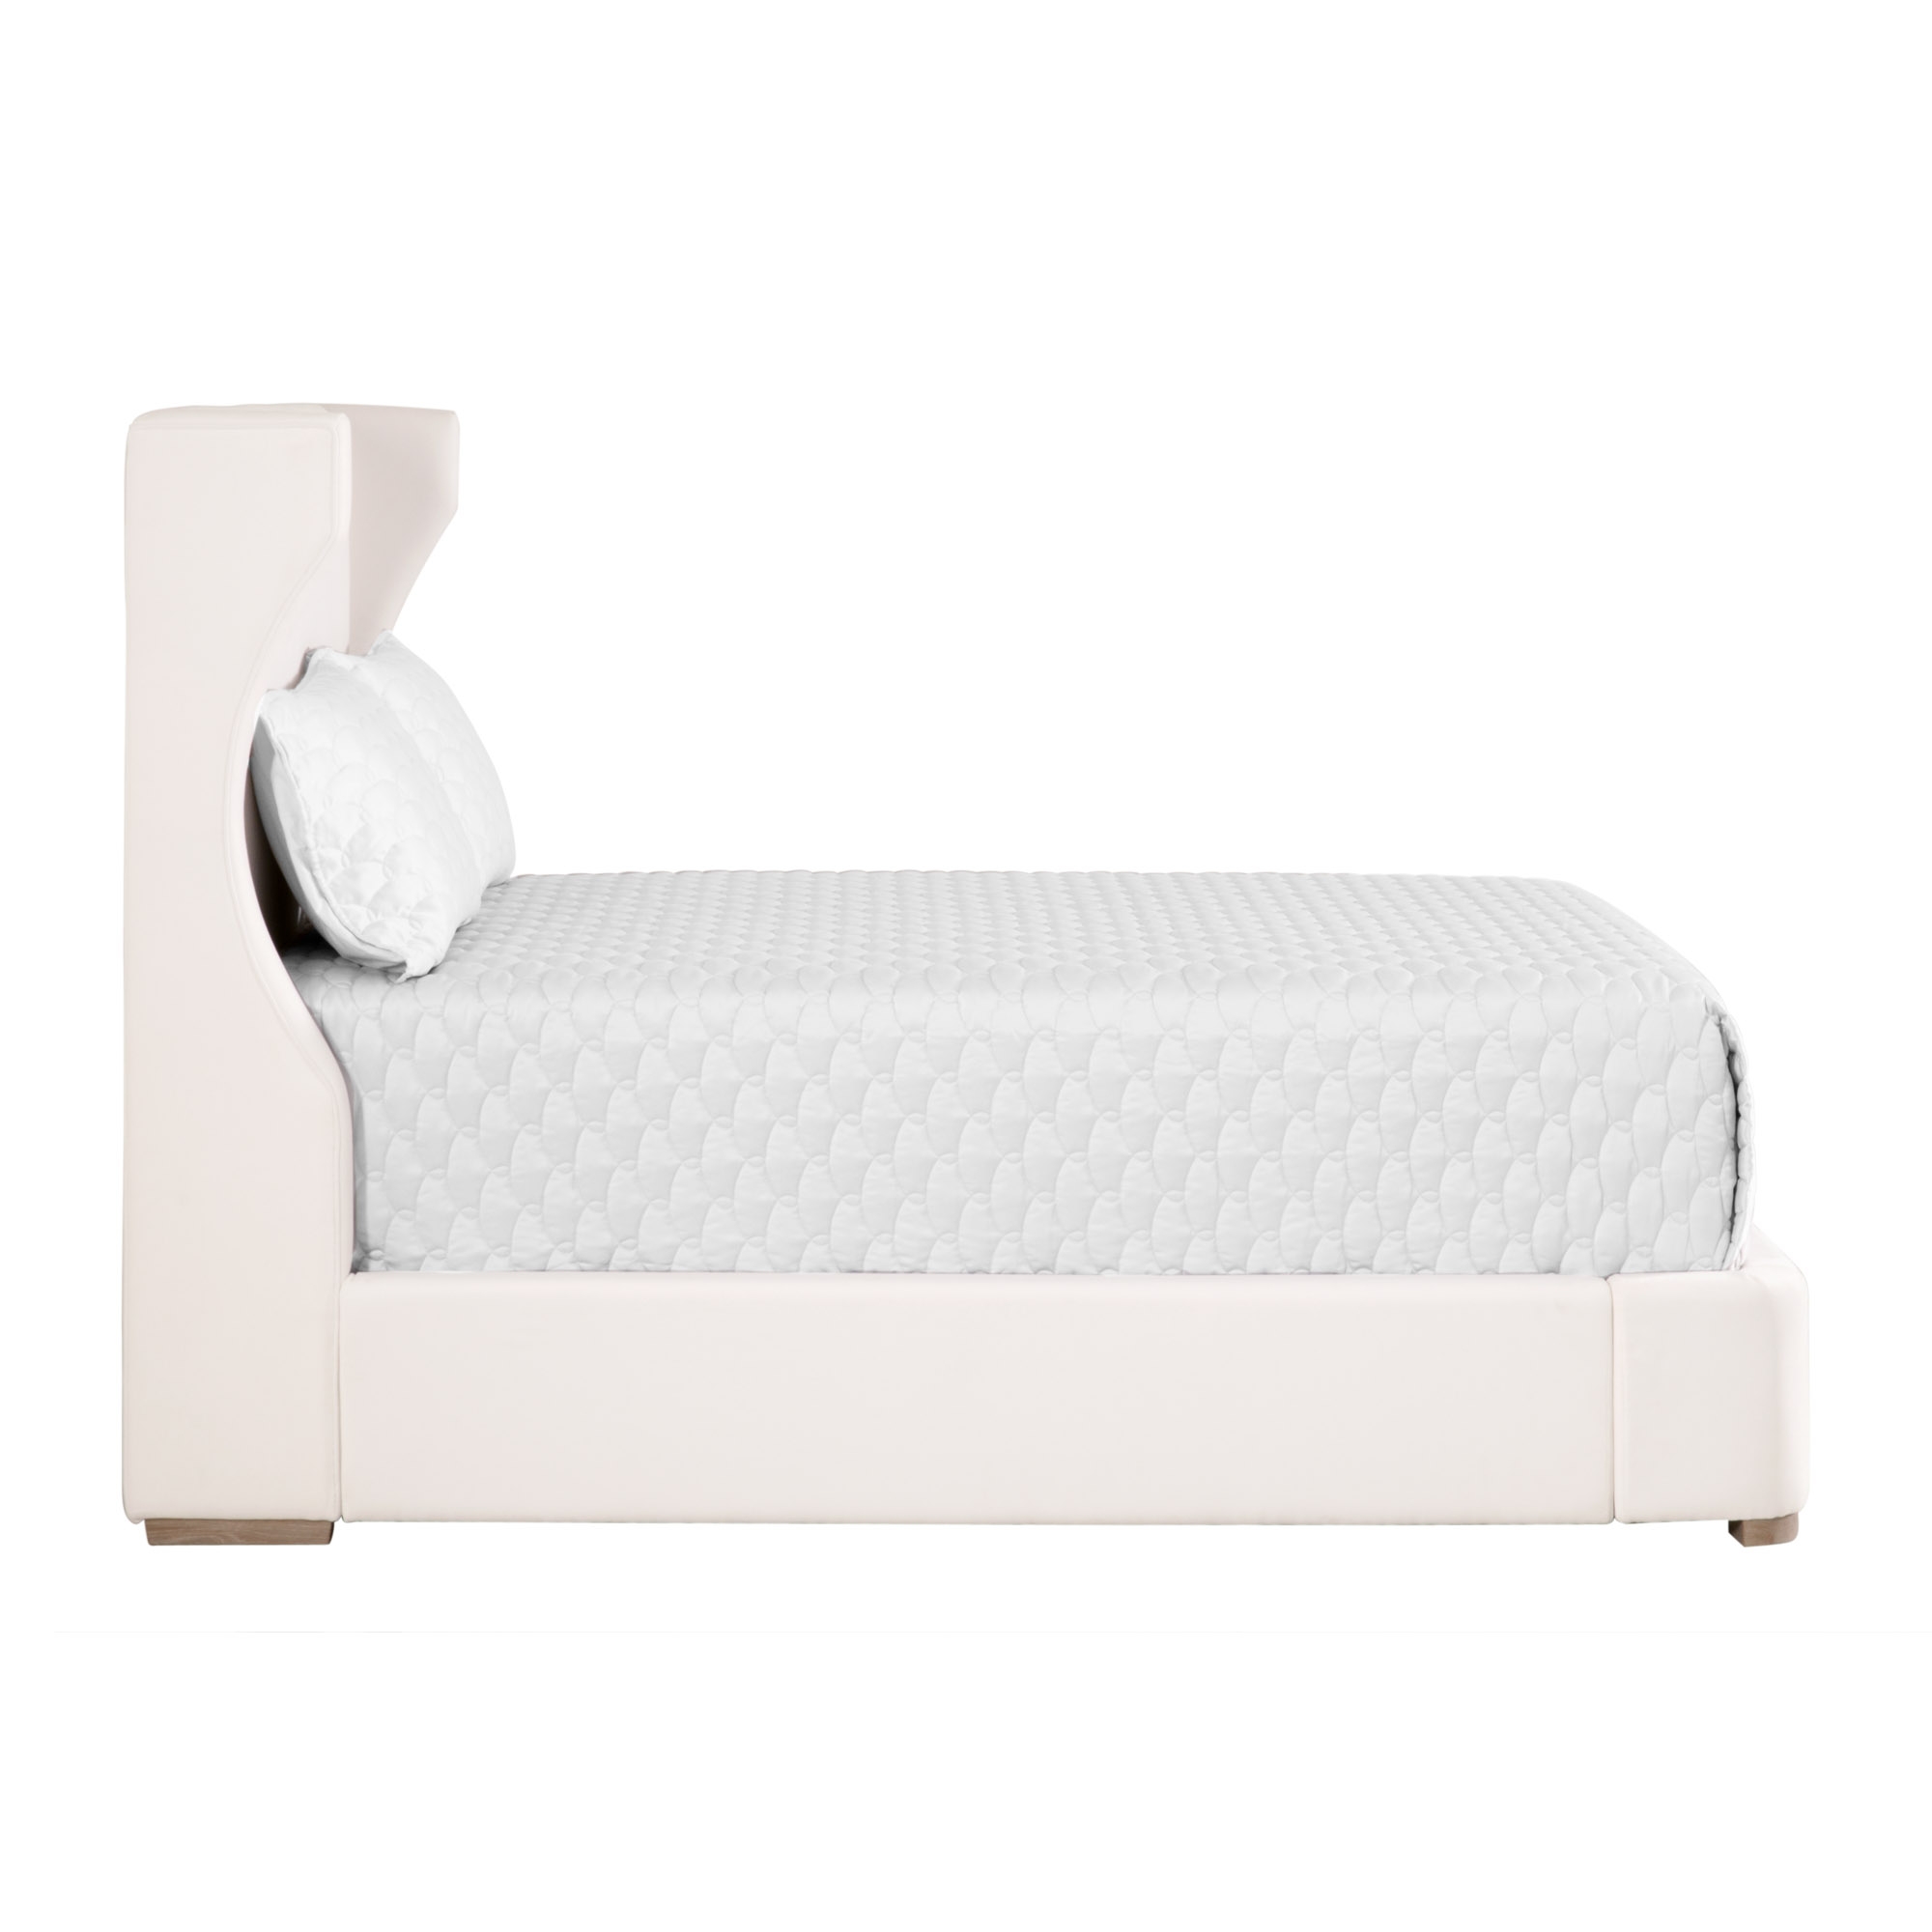 Balboa Standard King Bed - Image 2